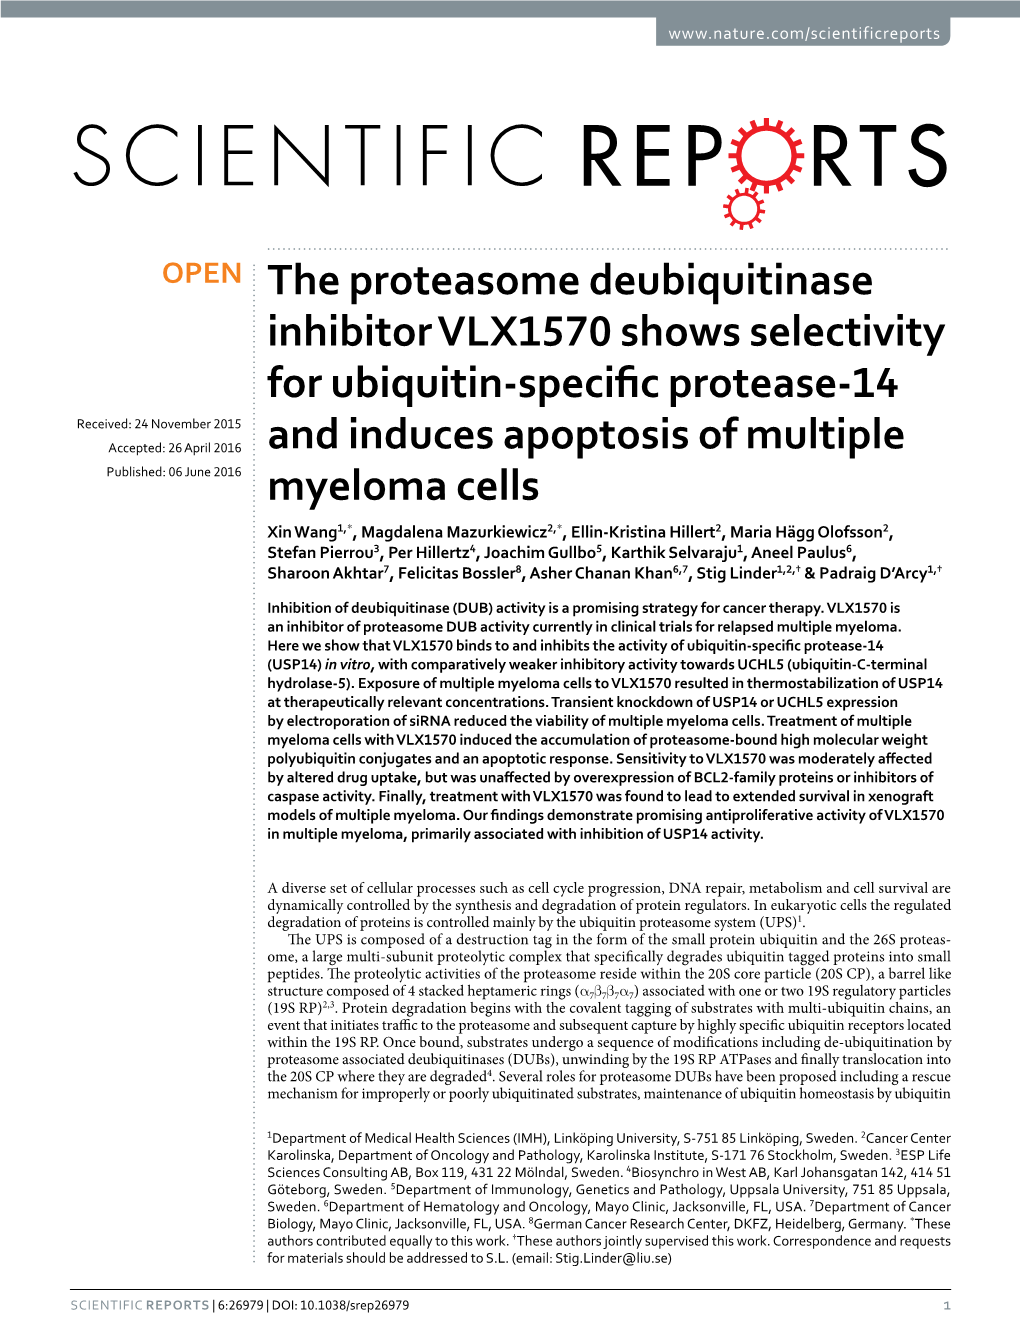 The Proteasome Deubiquitinase Inhibitor VLX1570 Shows Selectivity